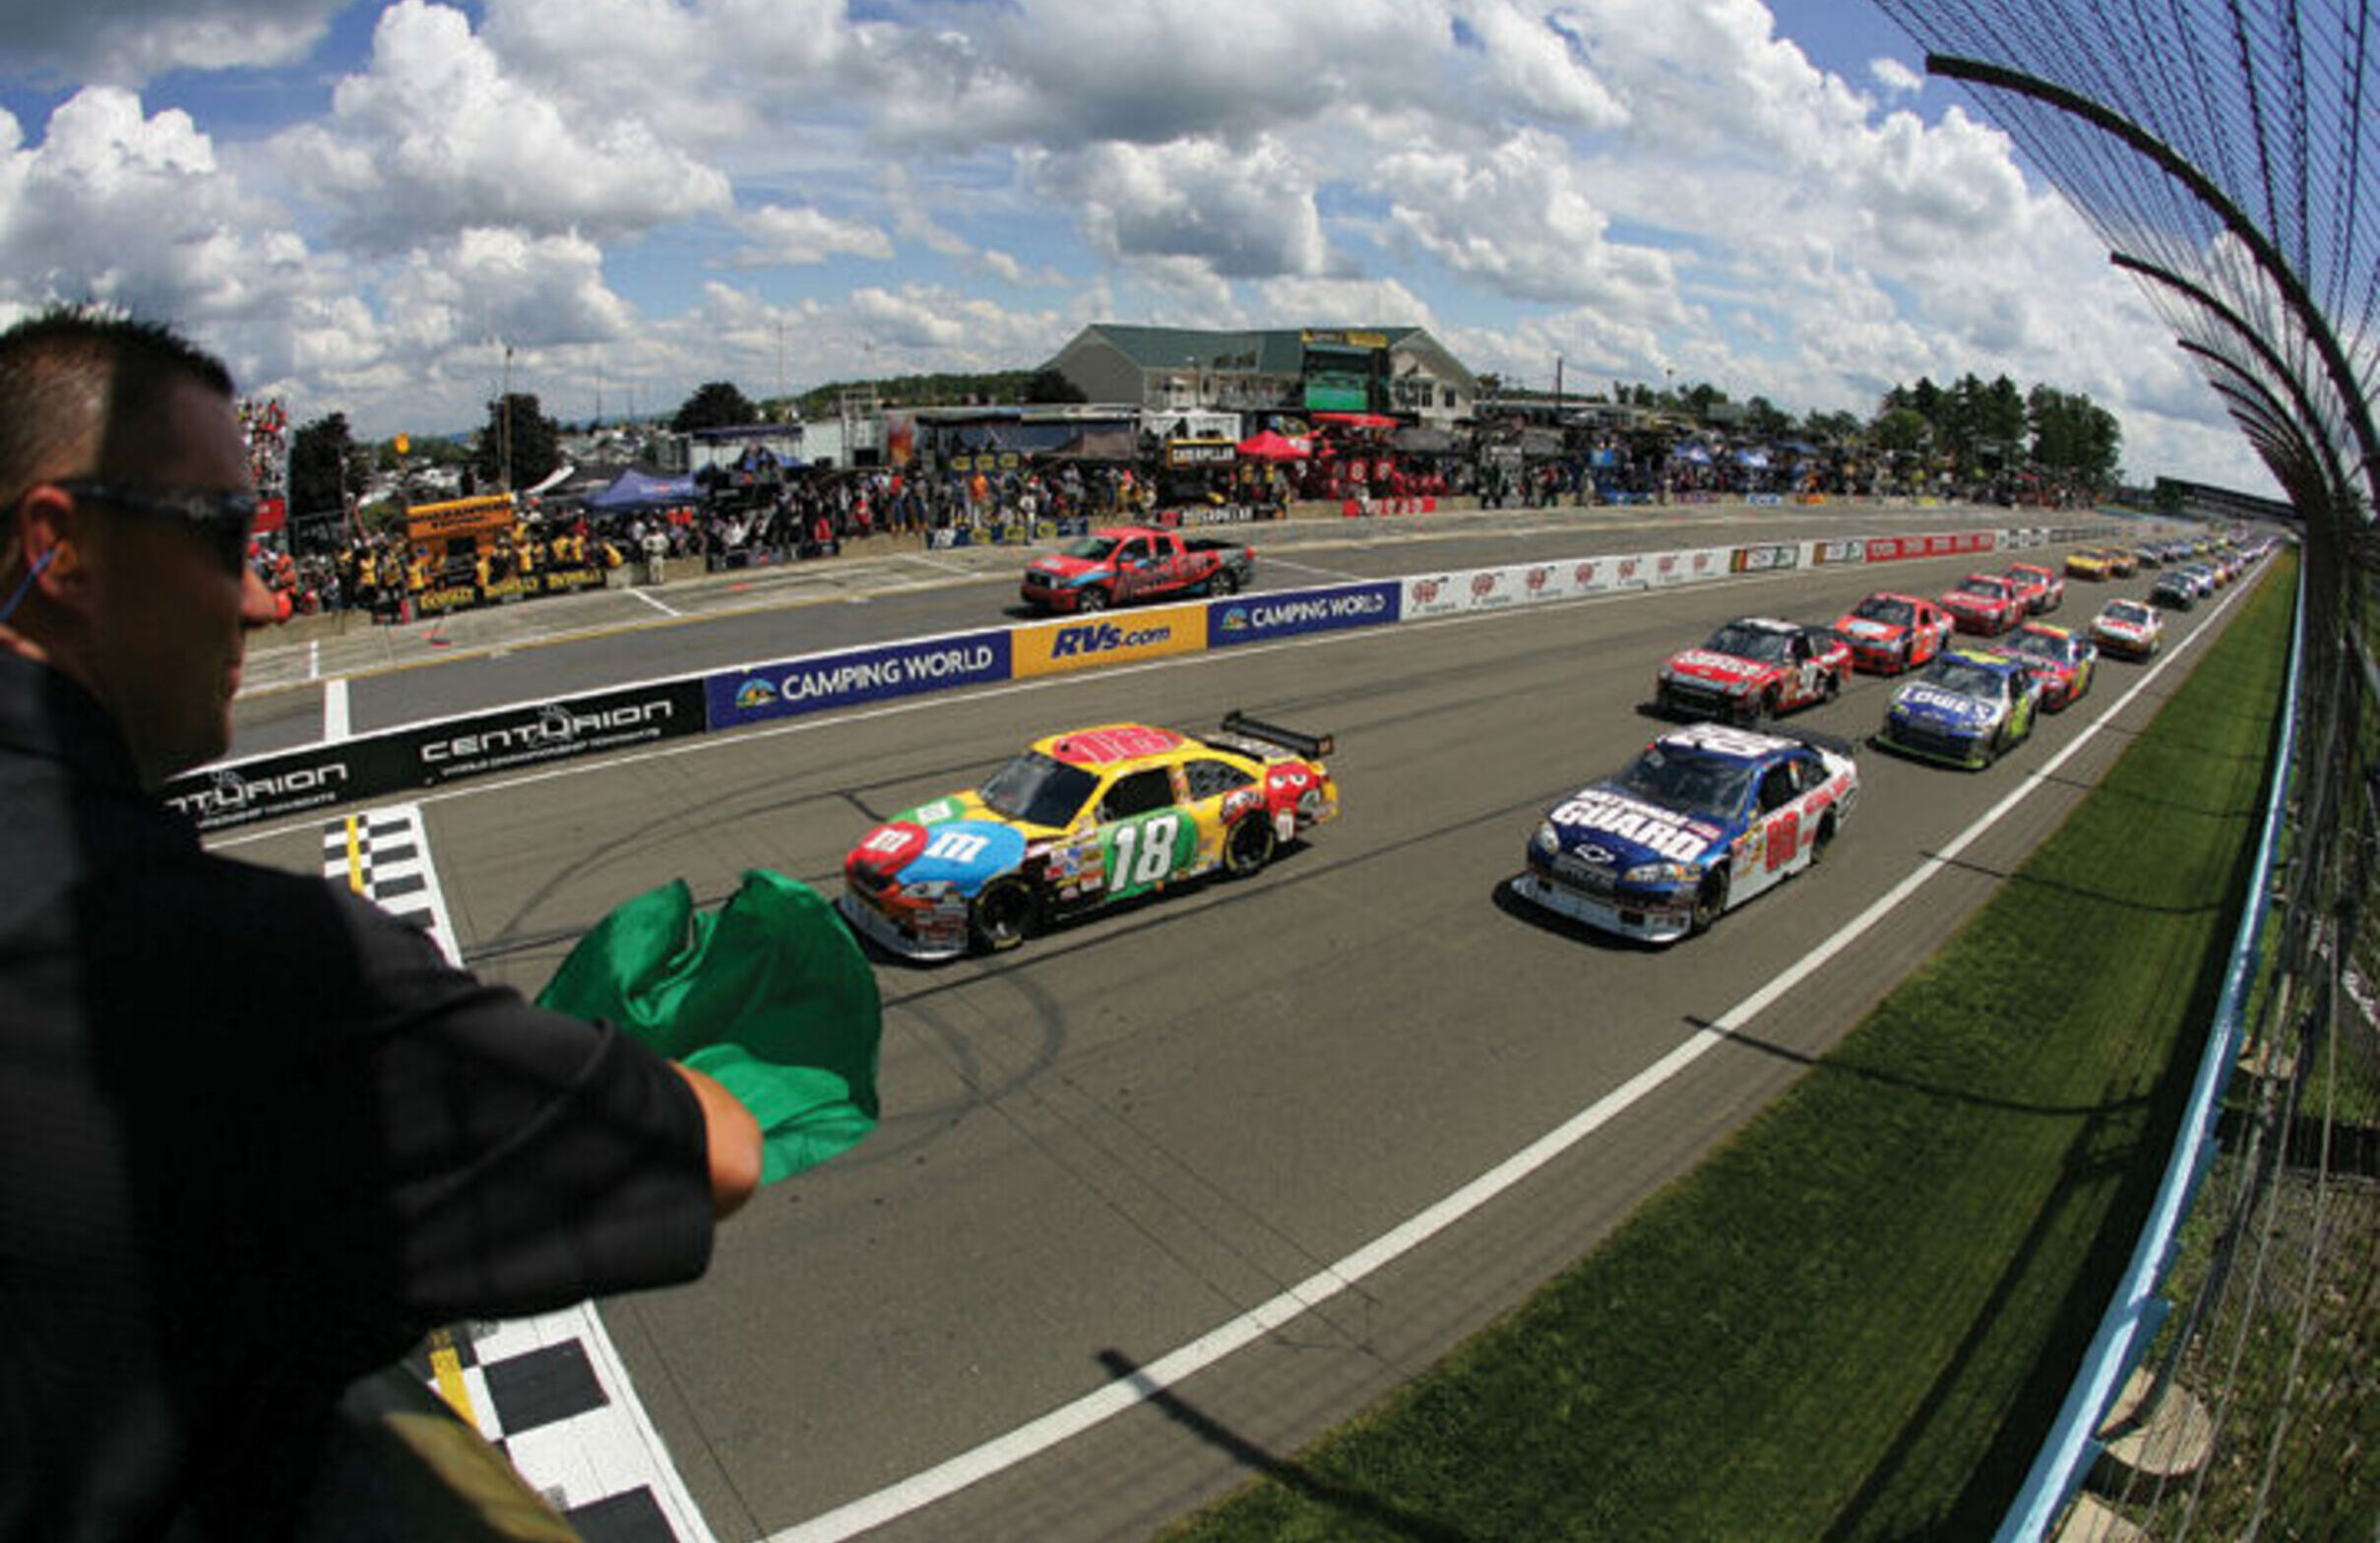 Cars race around the Watkins Glen Motor Speedway track